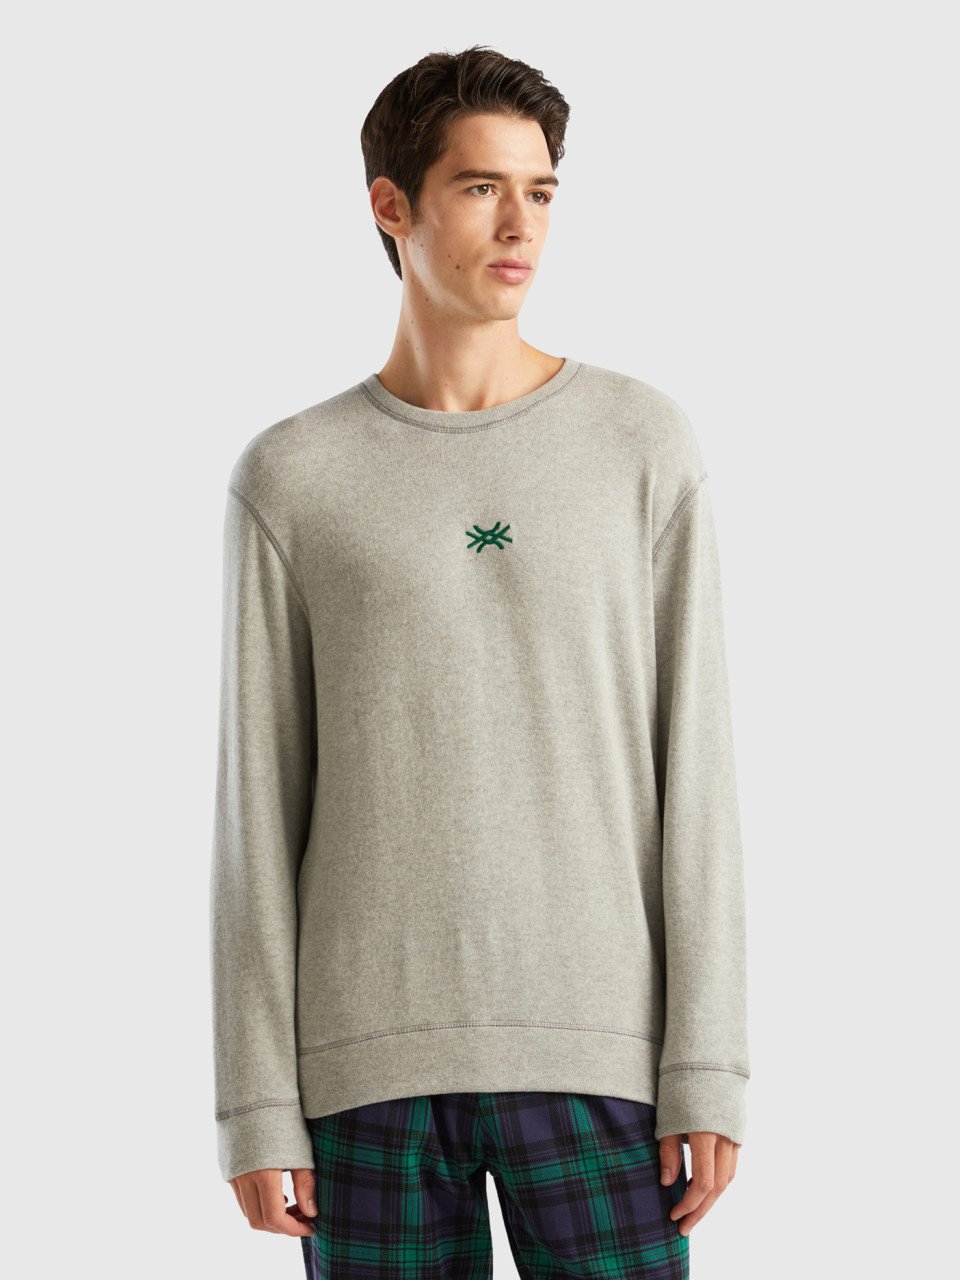 Benetton, Warm Stretch Cotton Blend Sweater, Light Gray, Men